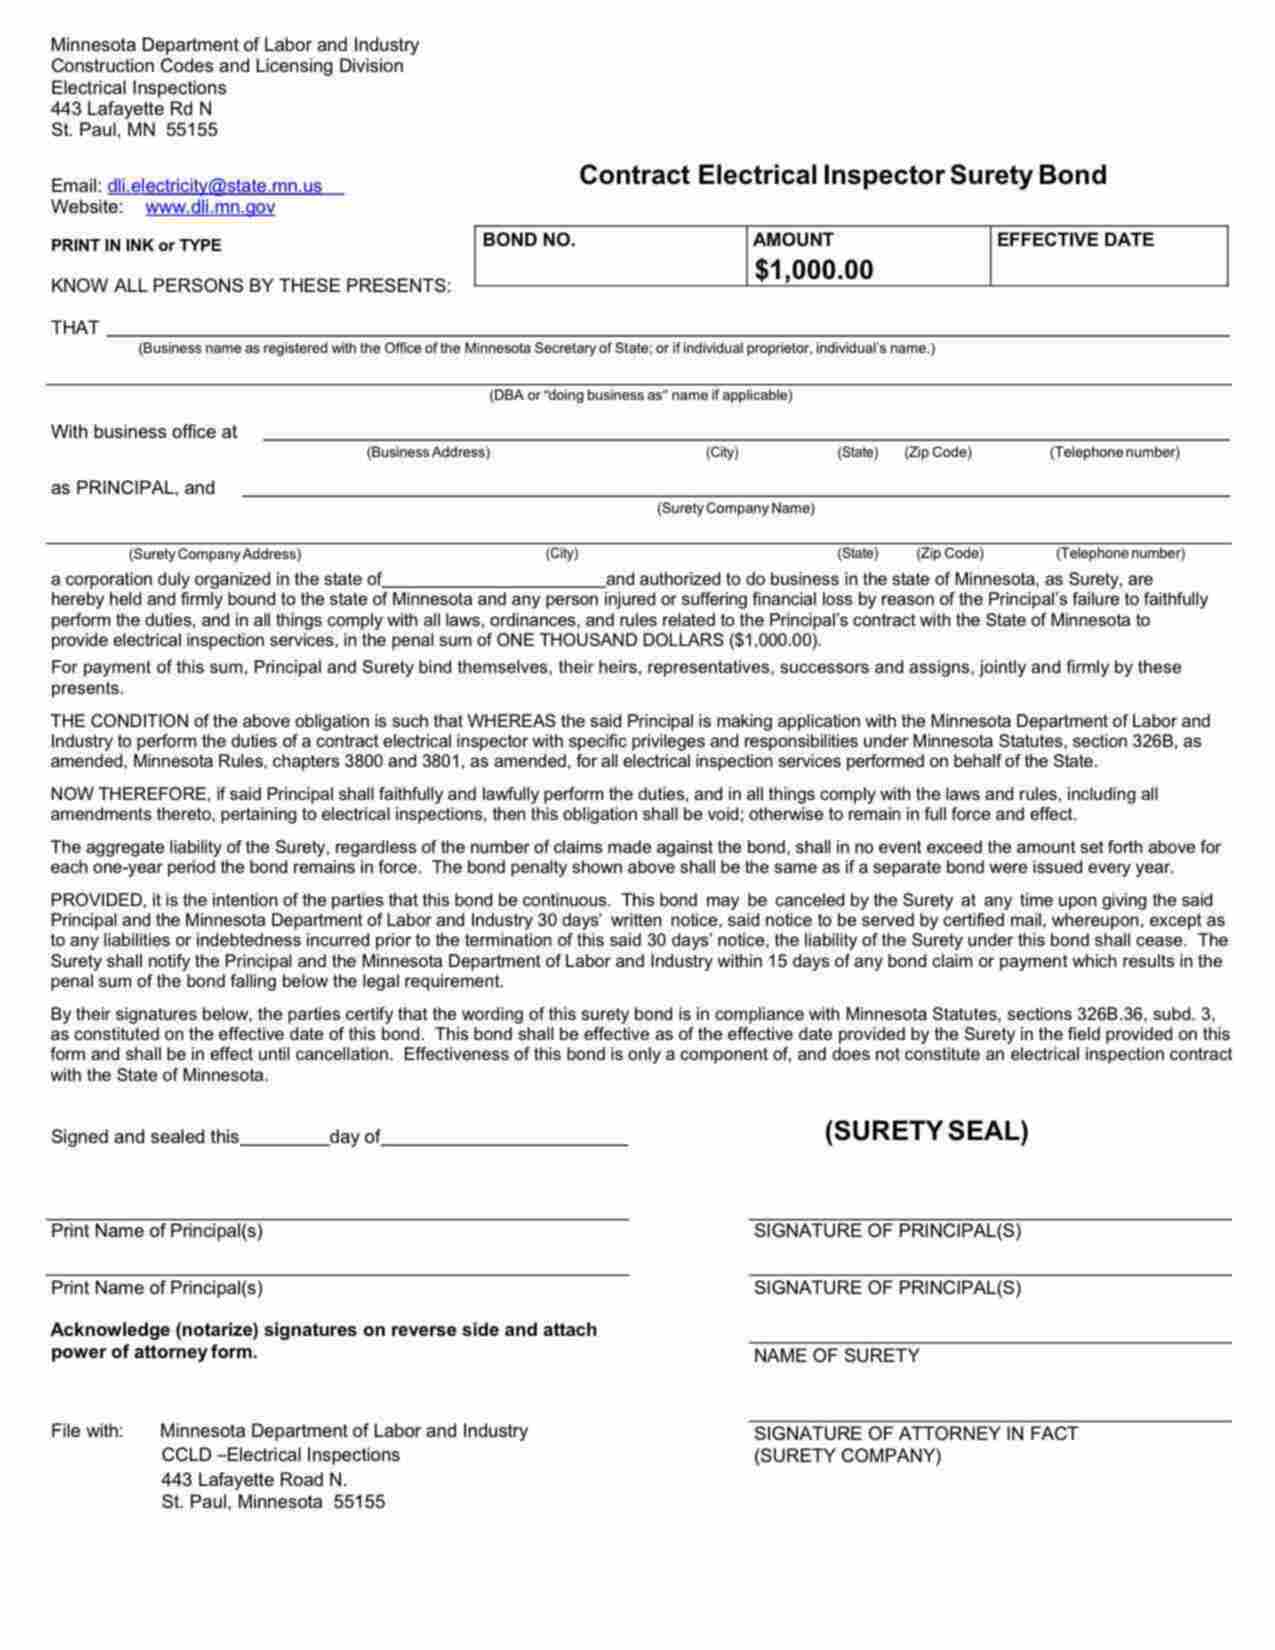 Minnesota Contract Electrical Inspector Bond Form